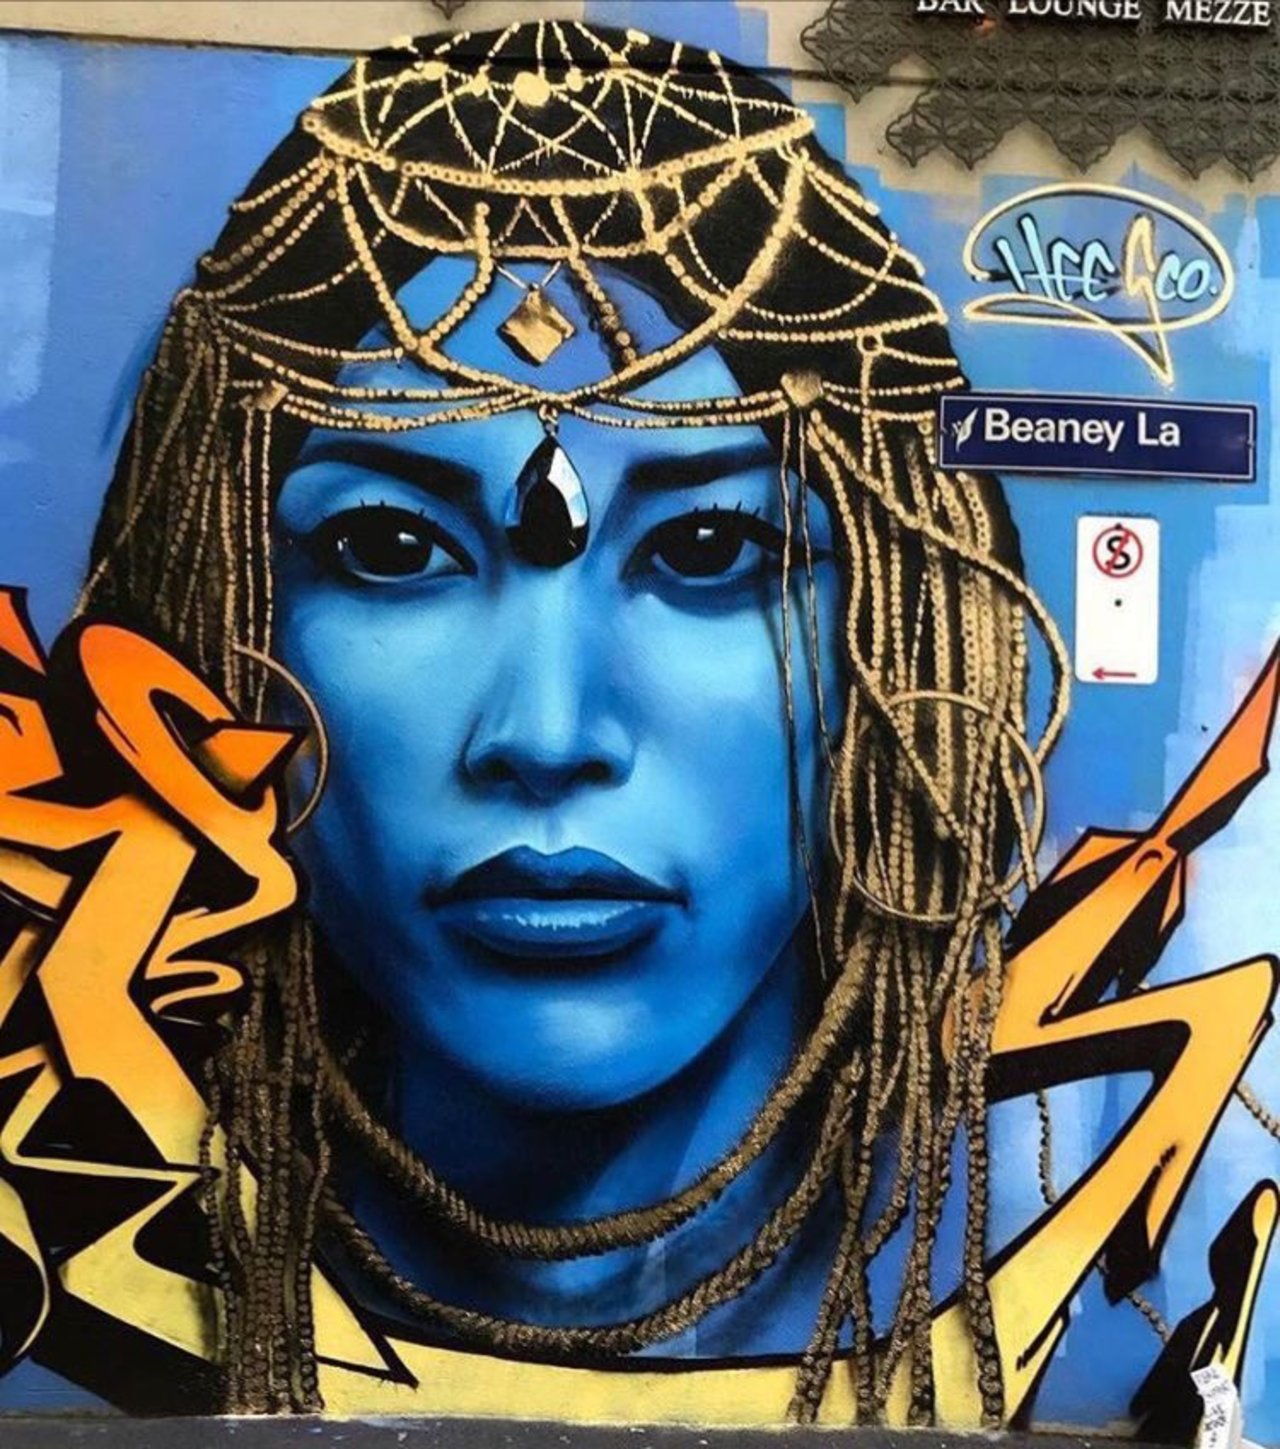 #mural by Heesco #Melbourne #Australia #art #streetart #graffiti https://t.co/tJPzR9oCZV